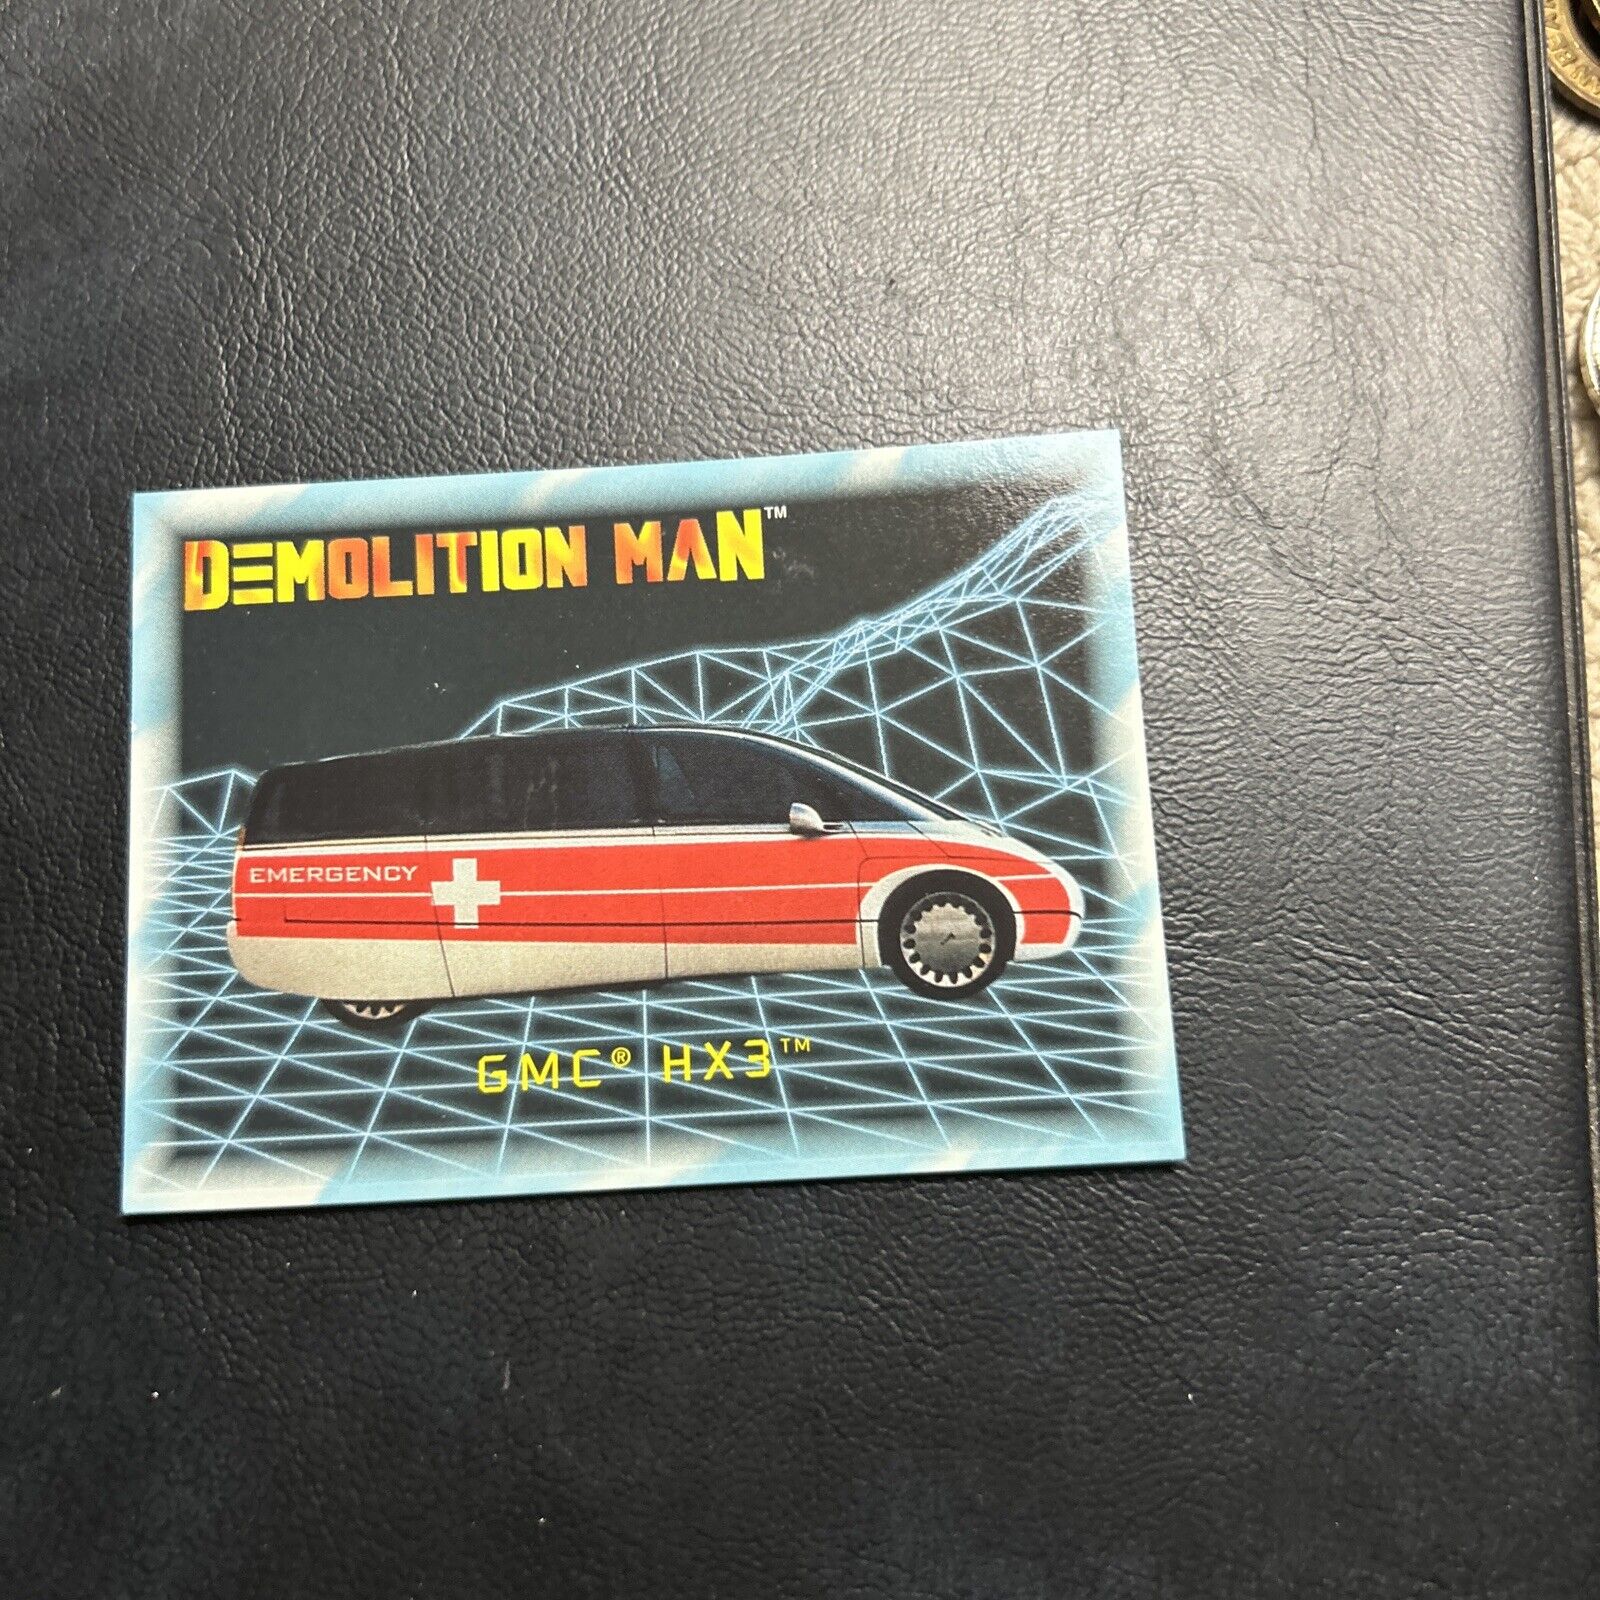 11d Demolition Man 1993 Skybox #86 Gmc Hx3 Gm Cars Of The Future Prototype